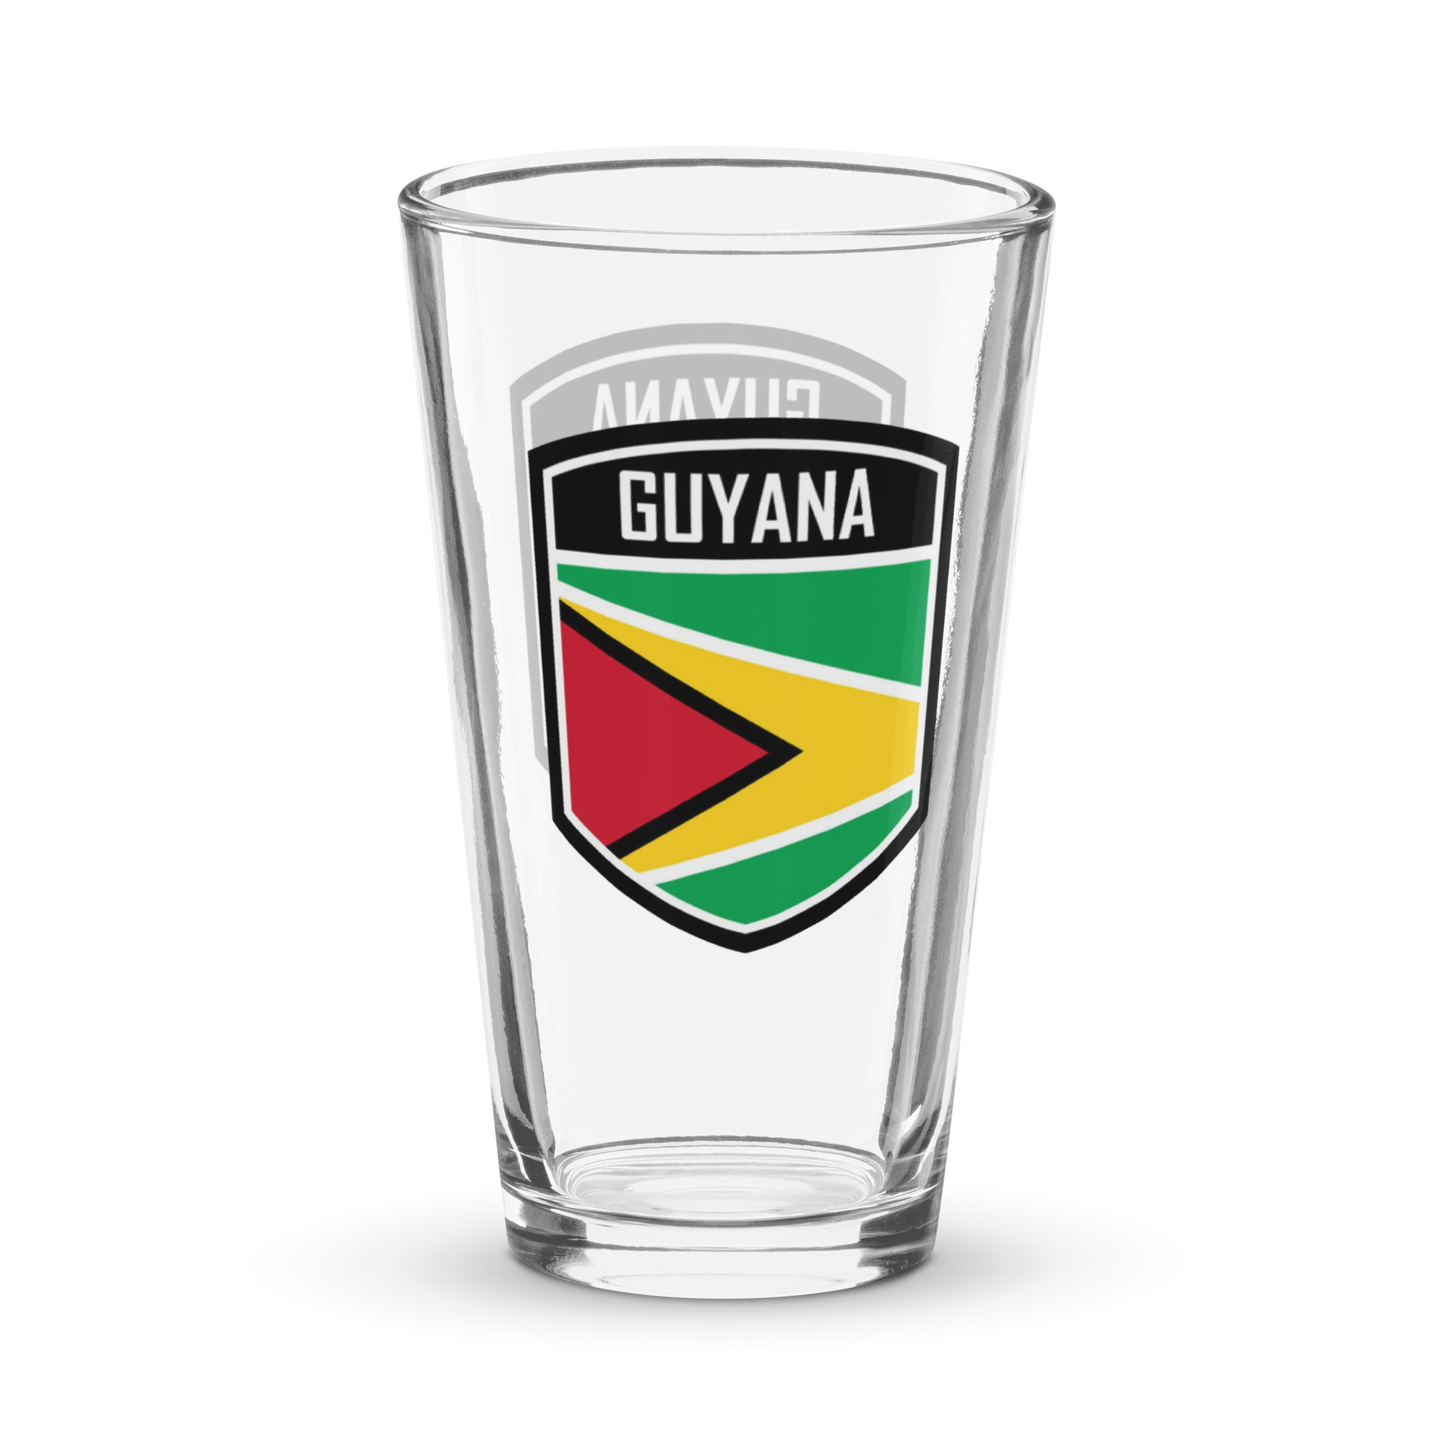 Guyana Shaker pint glass